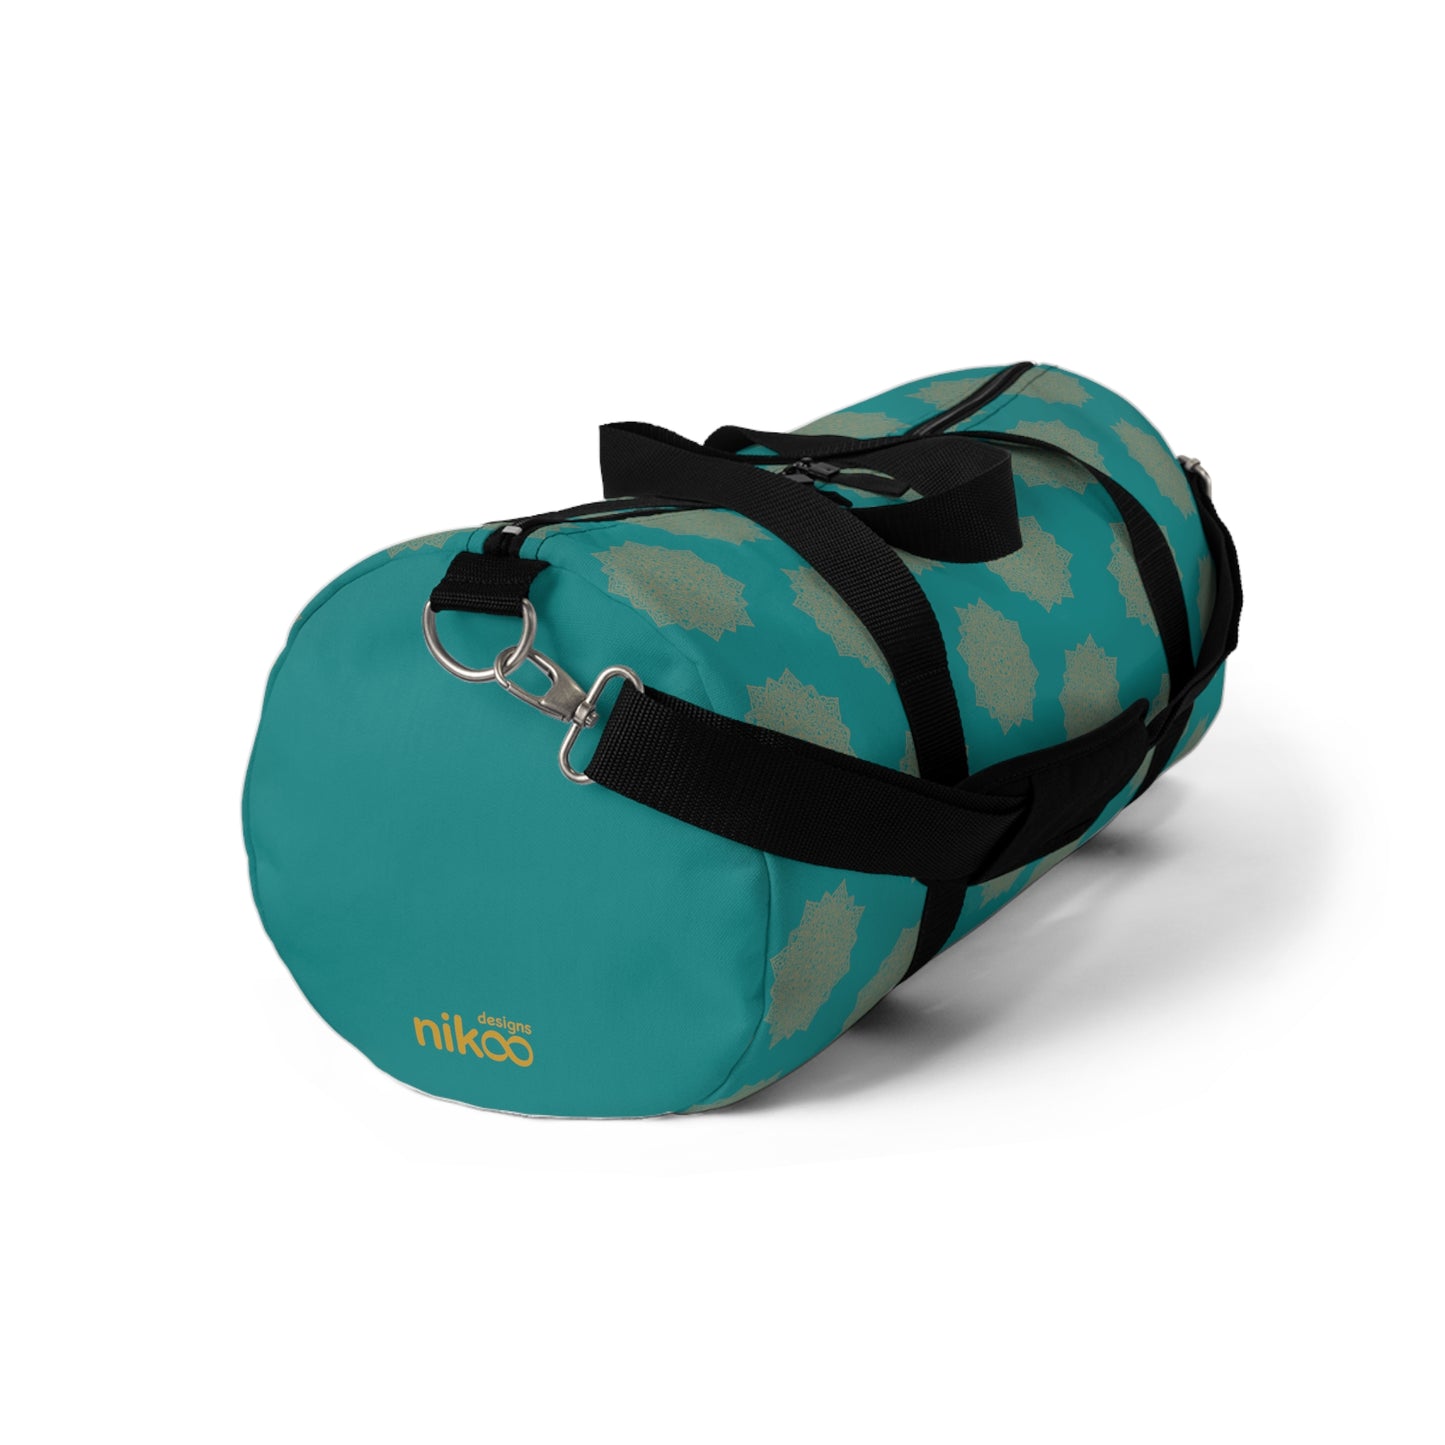 Duffel Bag: کیف ورزشی با طرح تذهیب شمسه